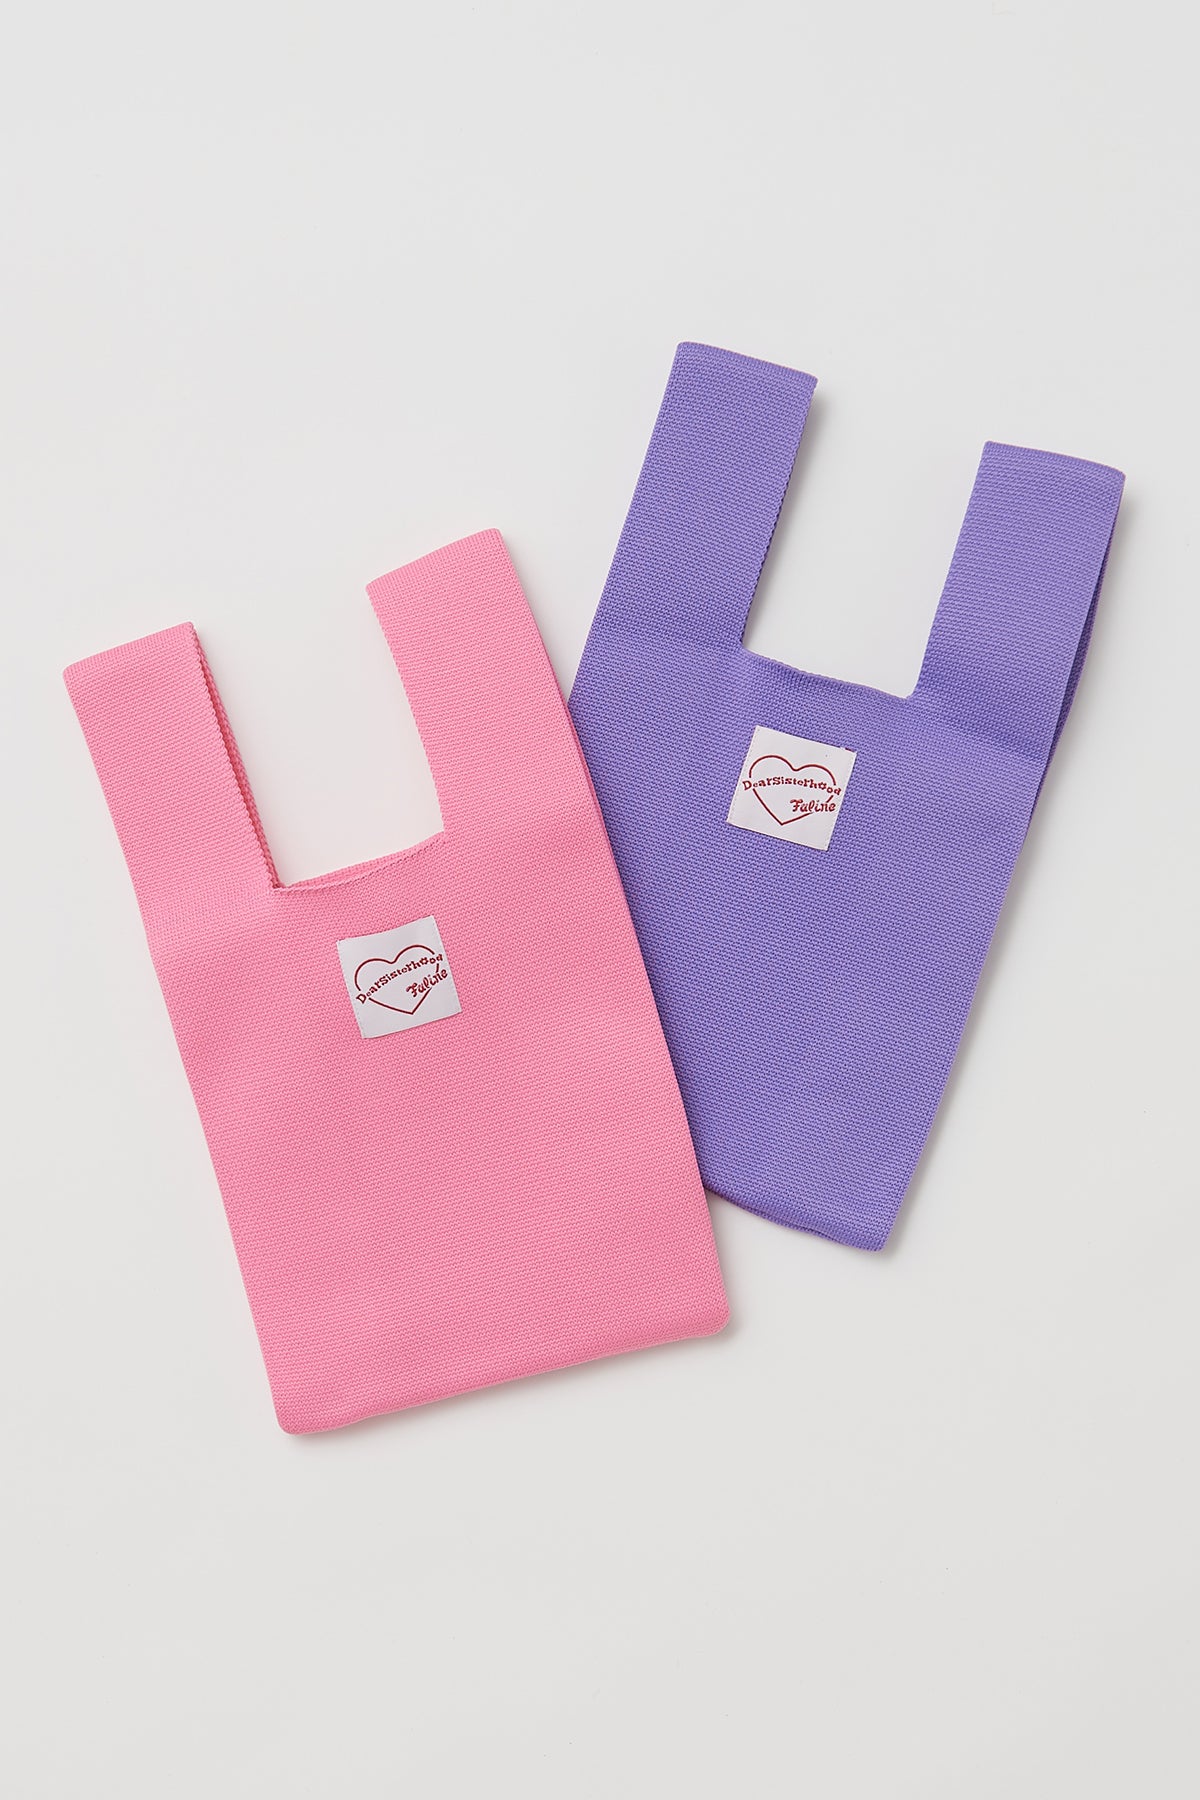 【 FALINE TOKYO × Dear Sisterhood Special Collaboration】Knit bag / Pink